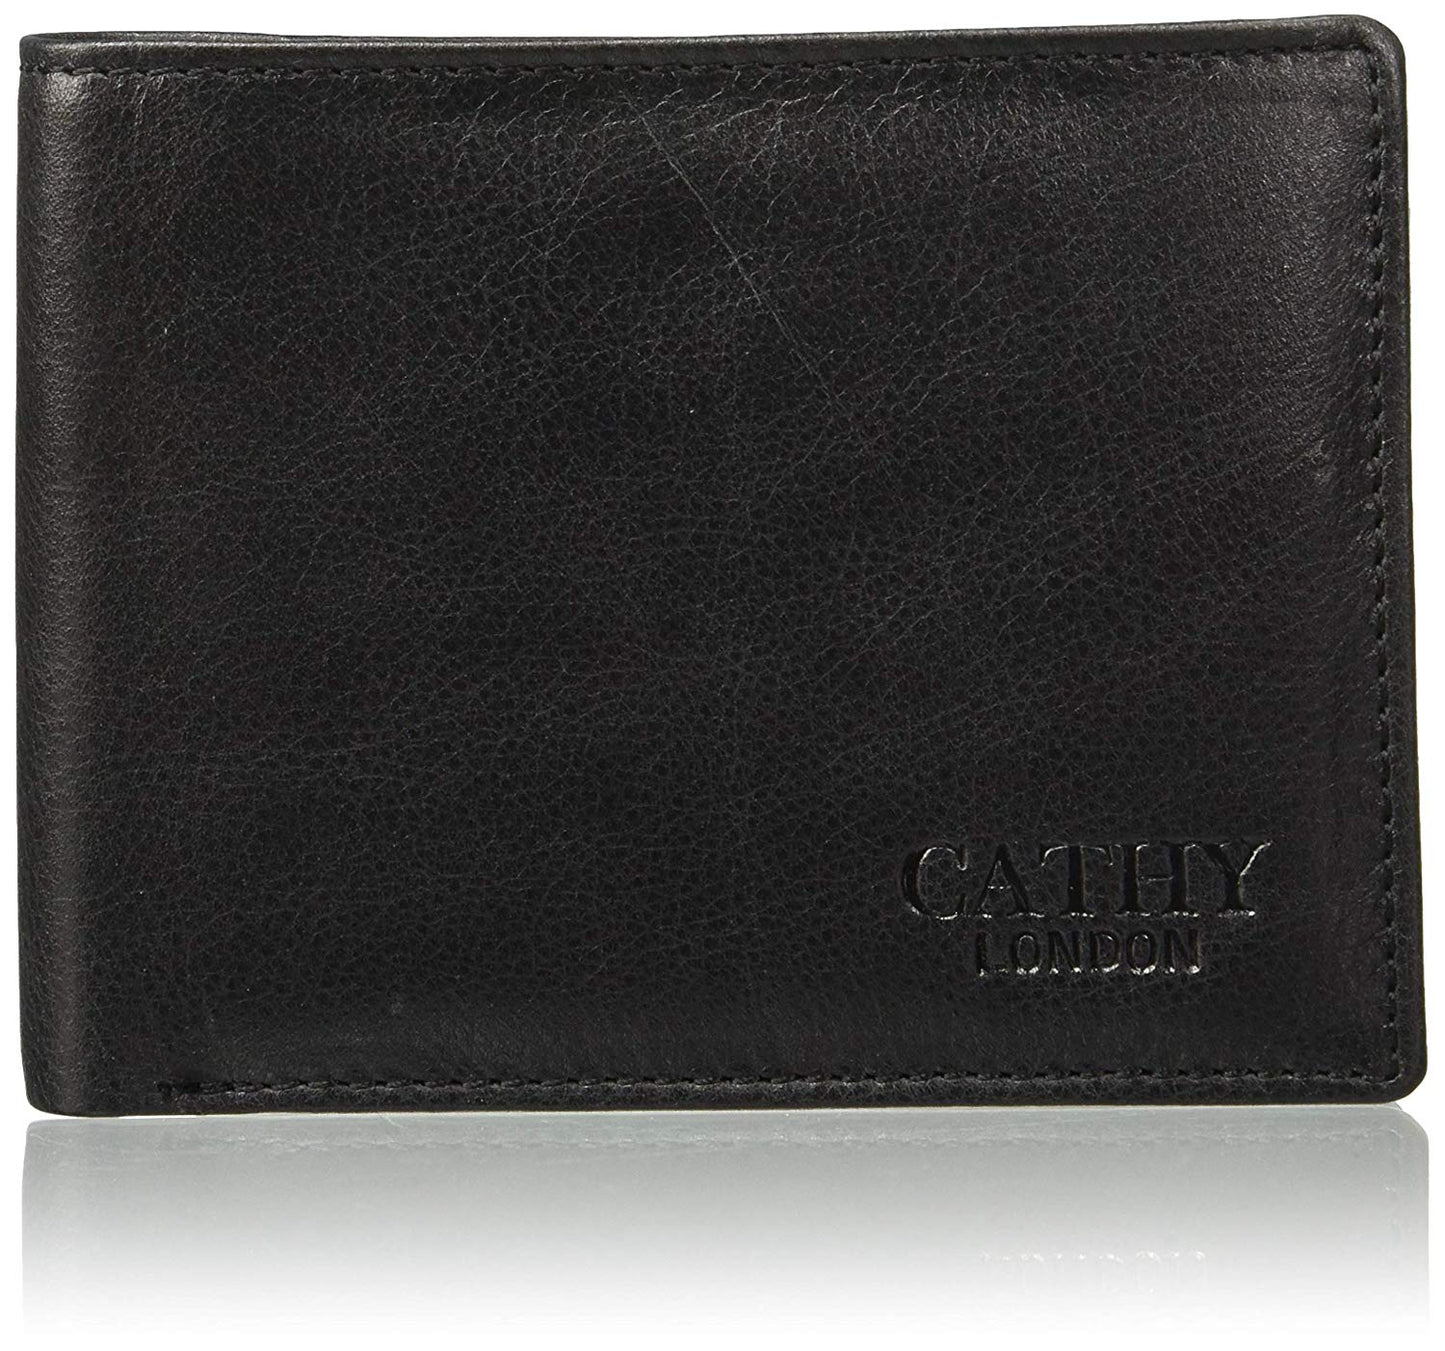 Black Colour Bi-Fold Italian Leather Slim Wallet ( 2 Card Slot + Hidden Compartment + 1 ID Slot+ Coin Pocket + Cash Compartment )